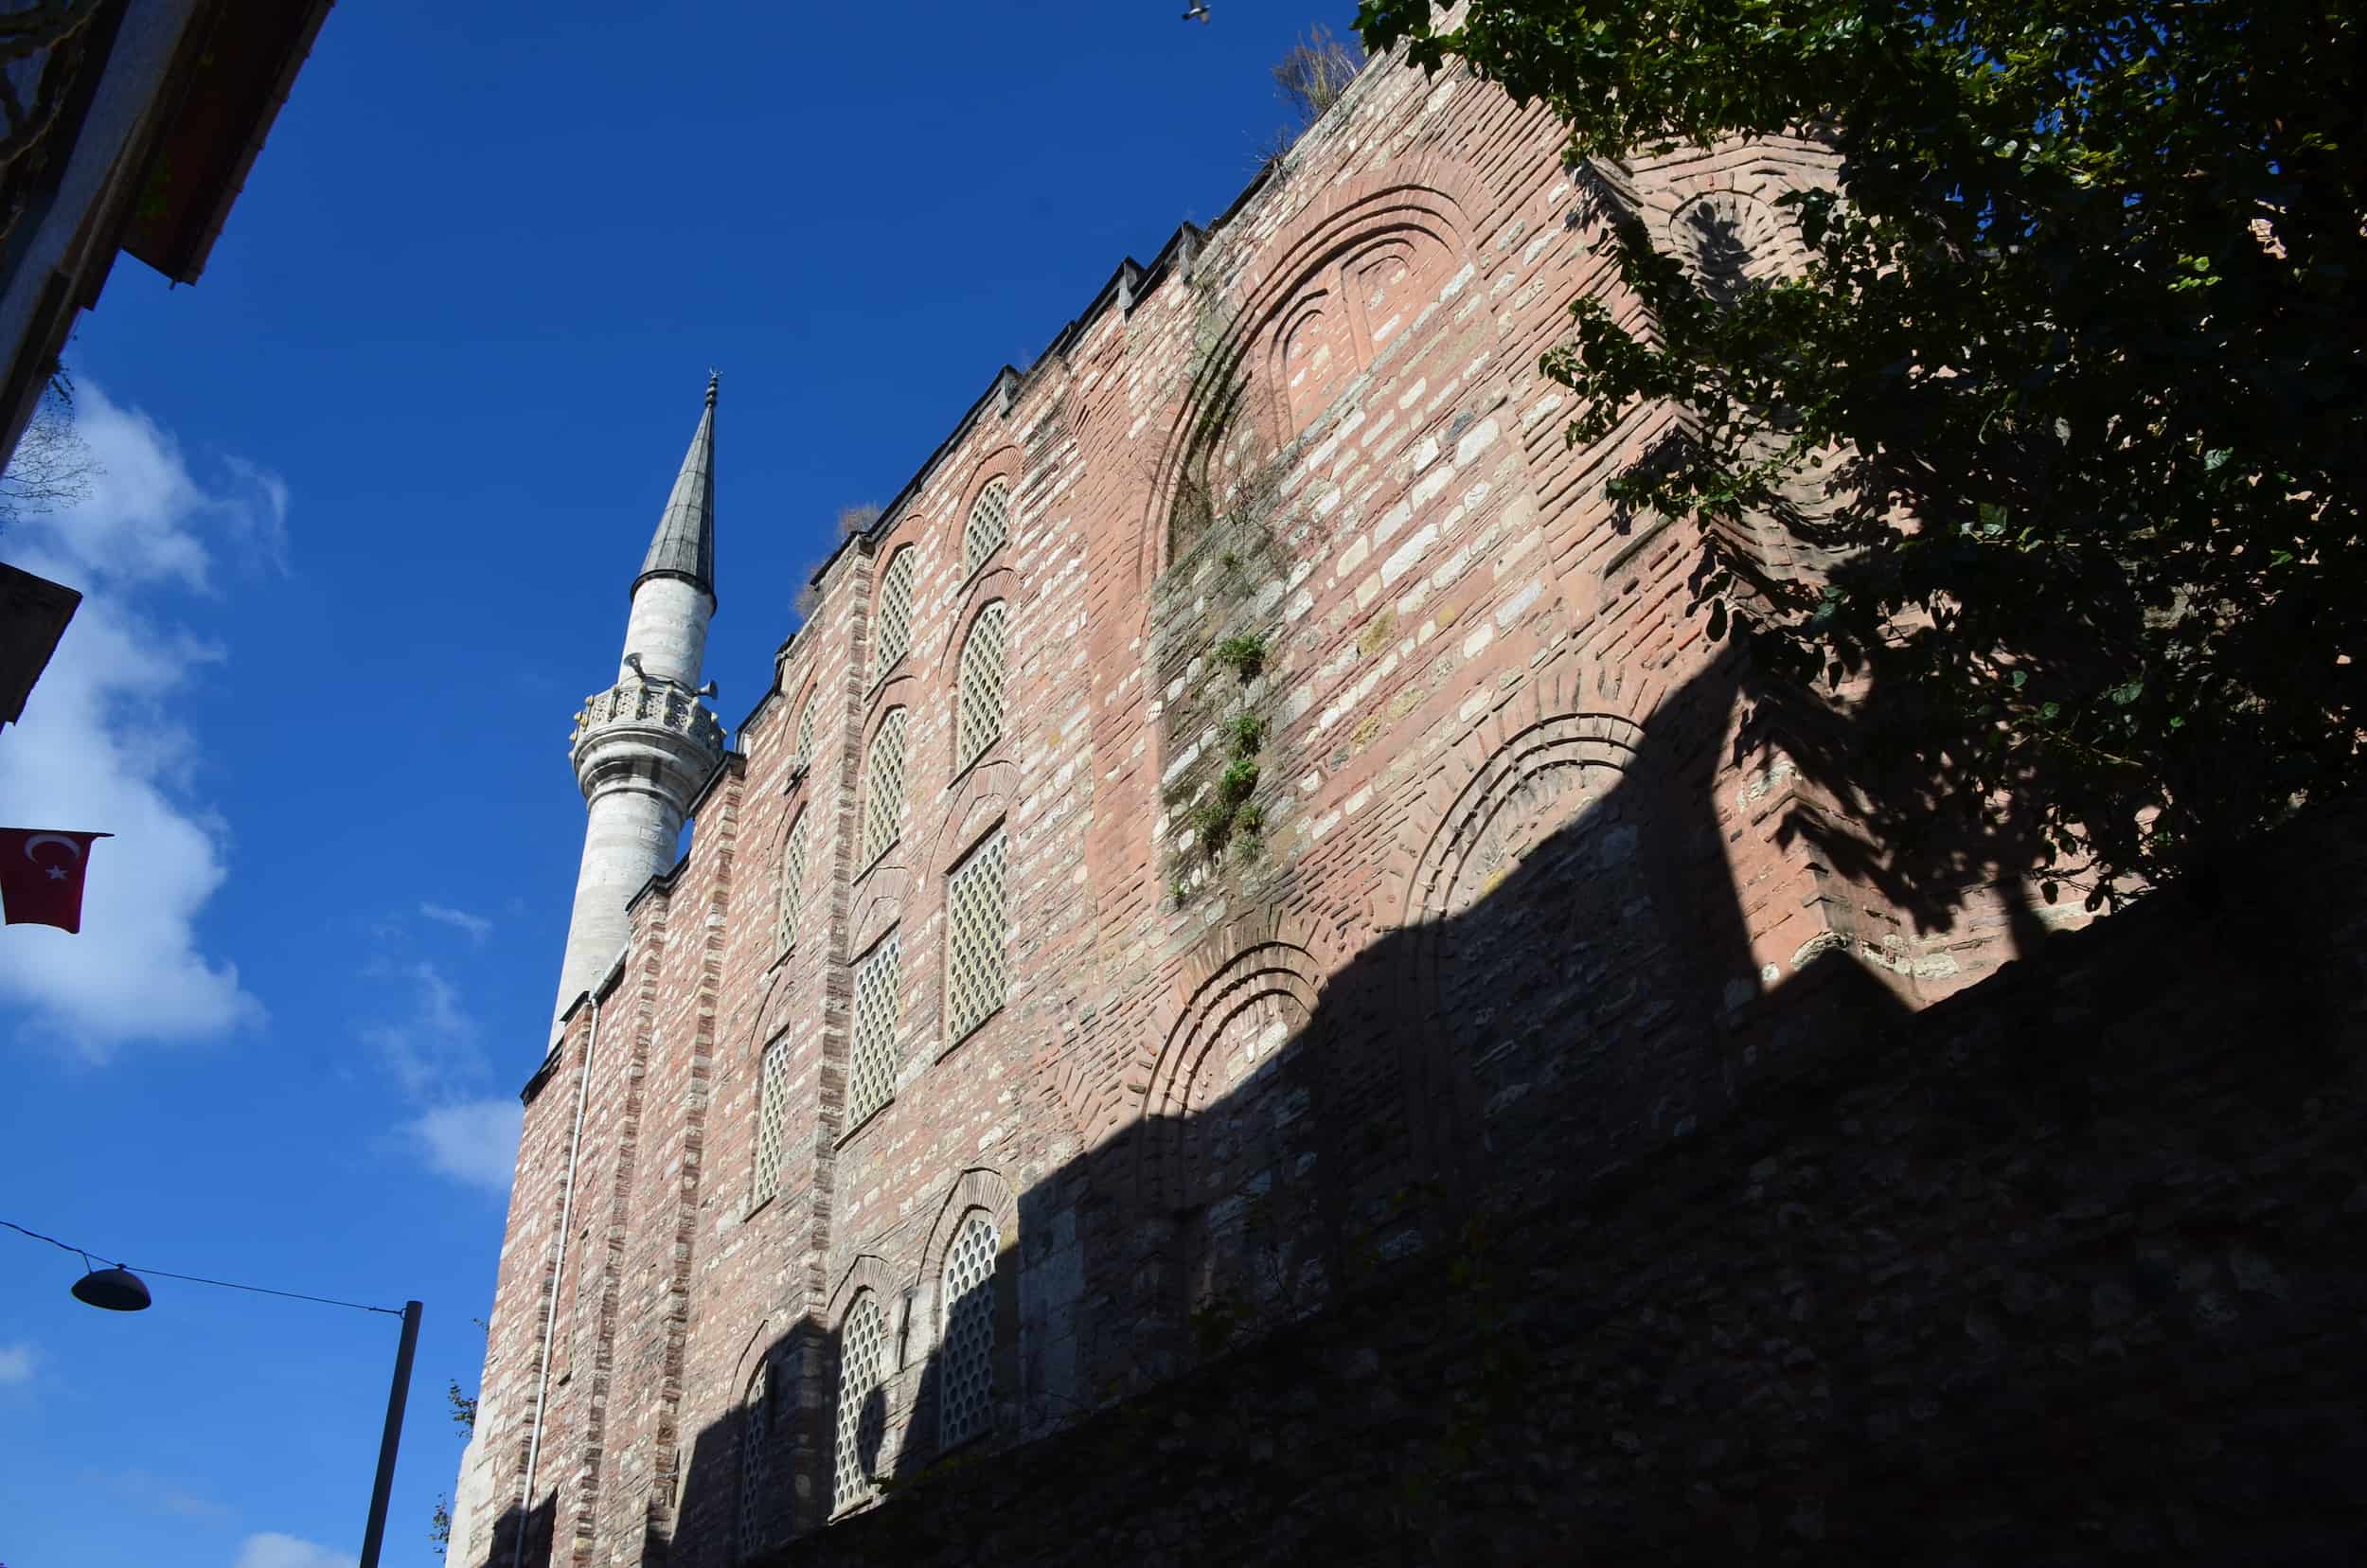 Gül Mosque in Ayakapı, Istanbul, Turkey